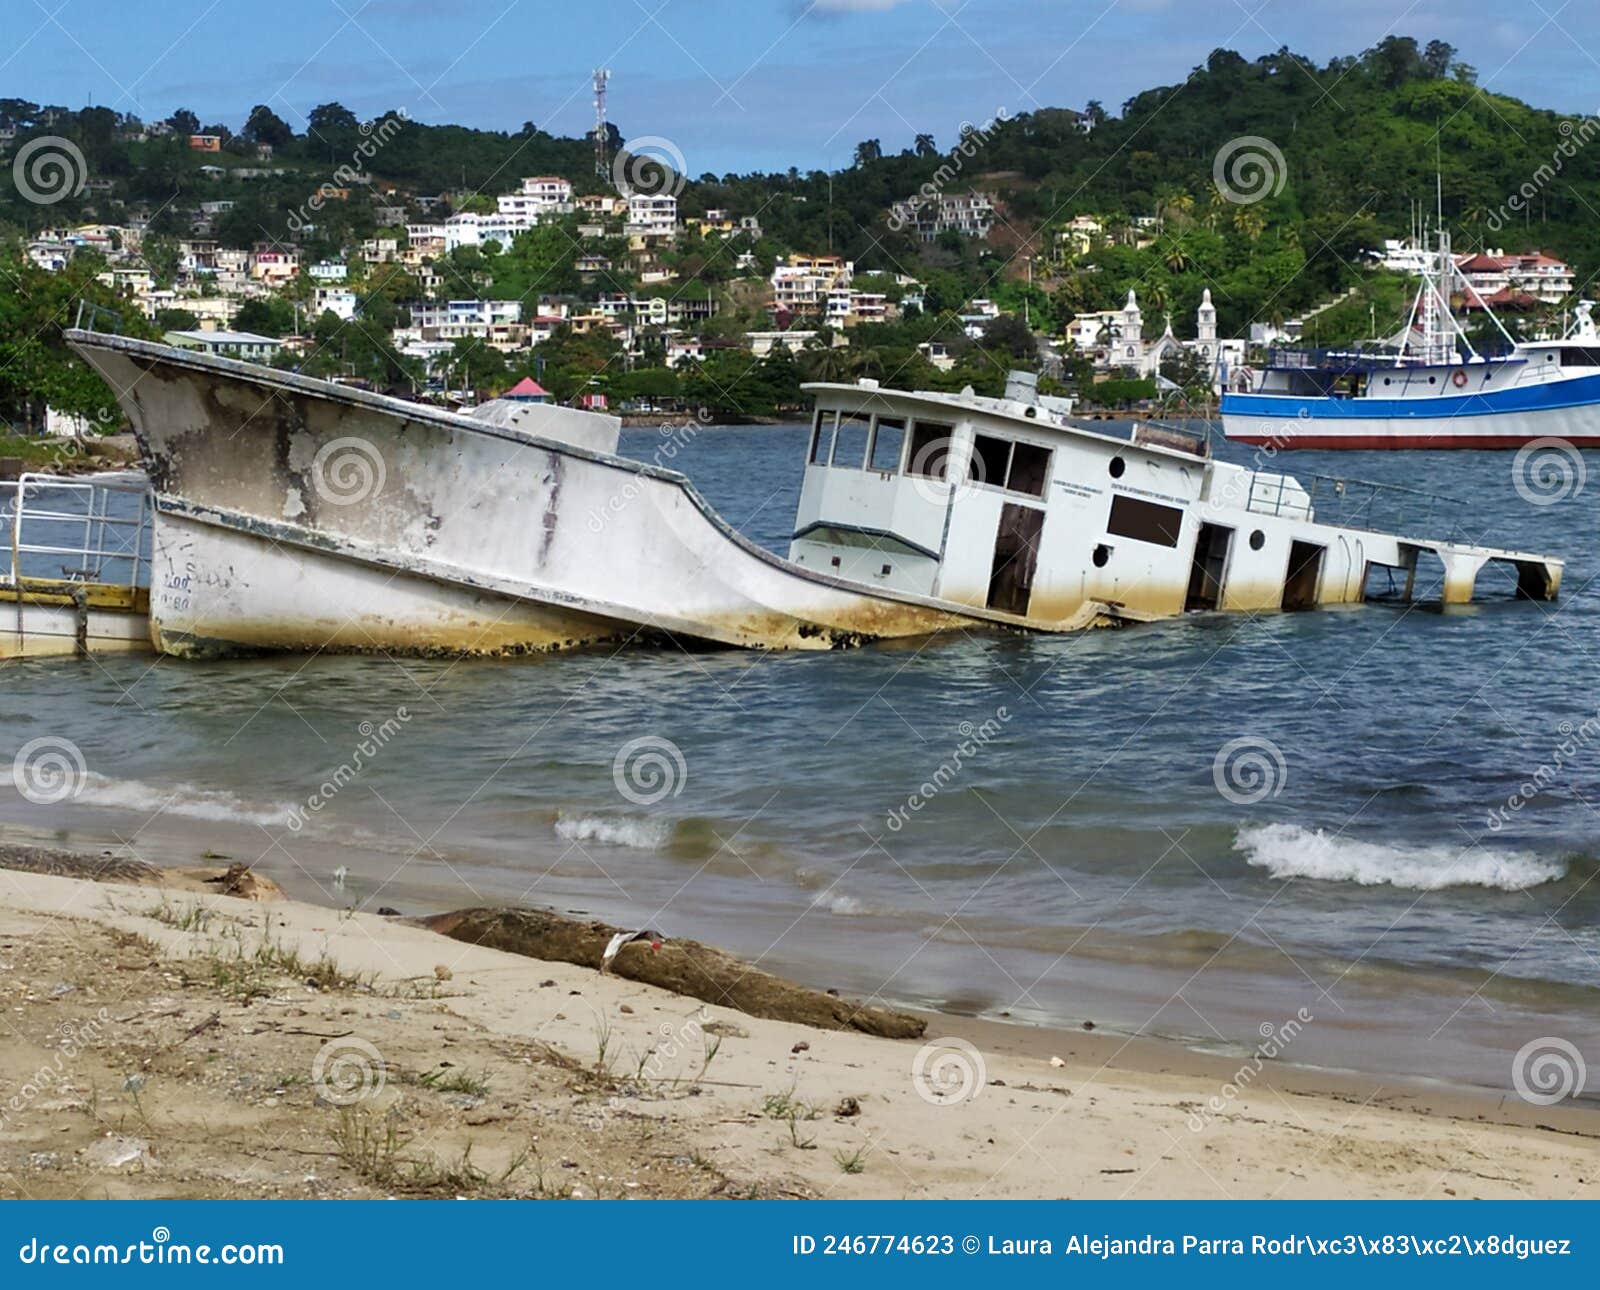 sunken ship on the seashore. barco hundido en la orilla del mar.